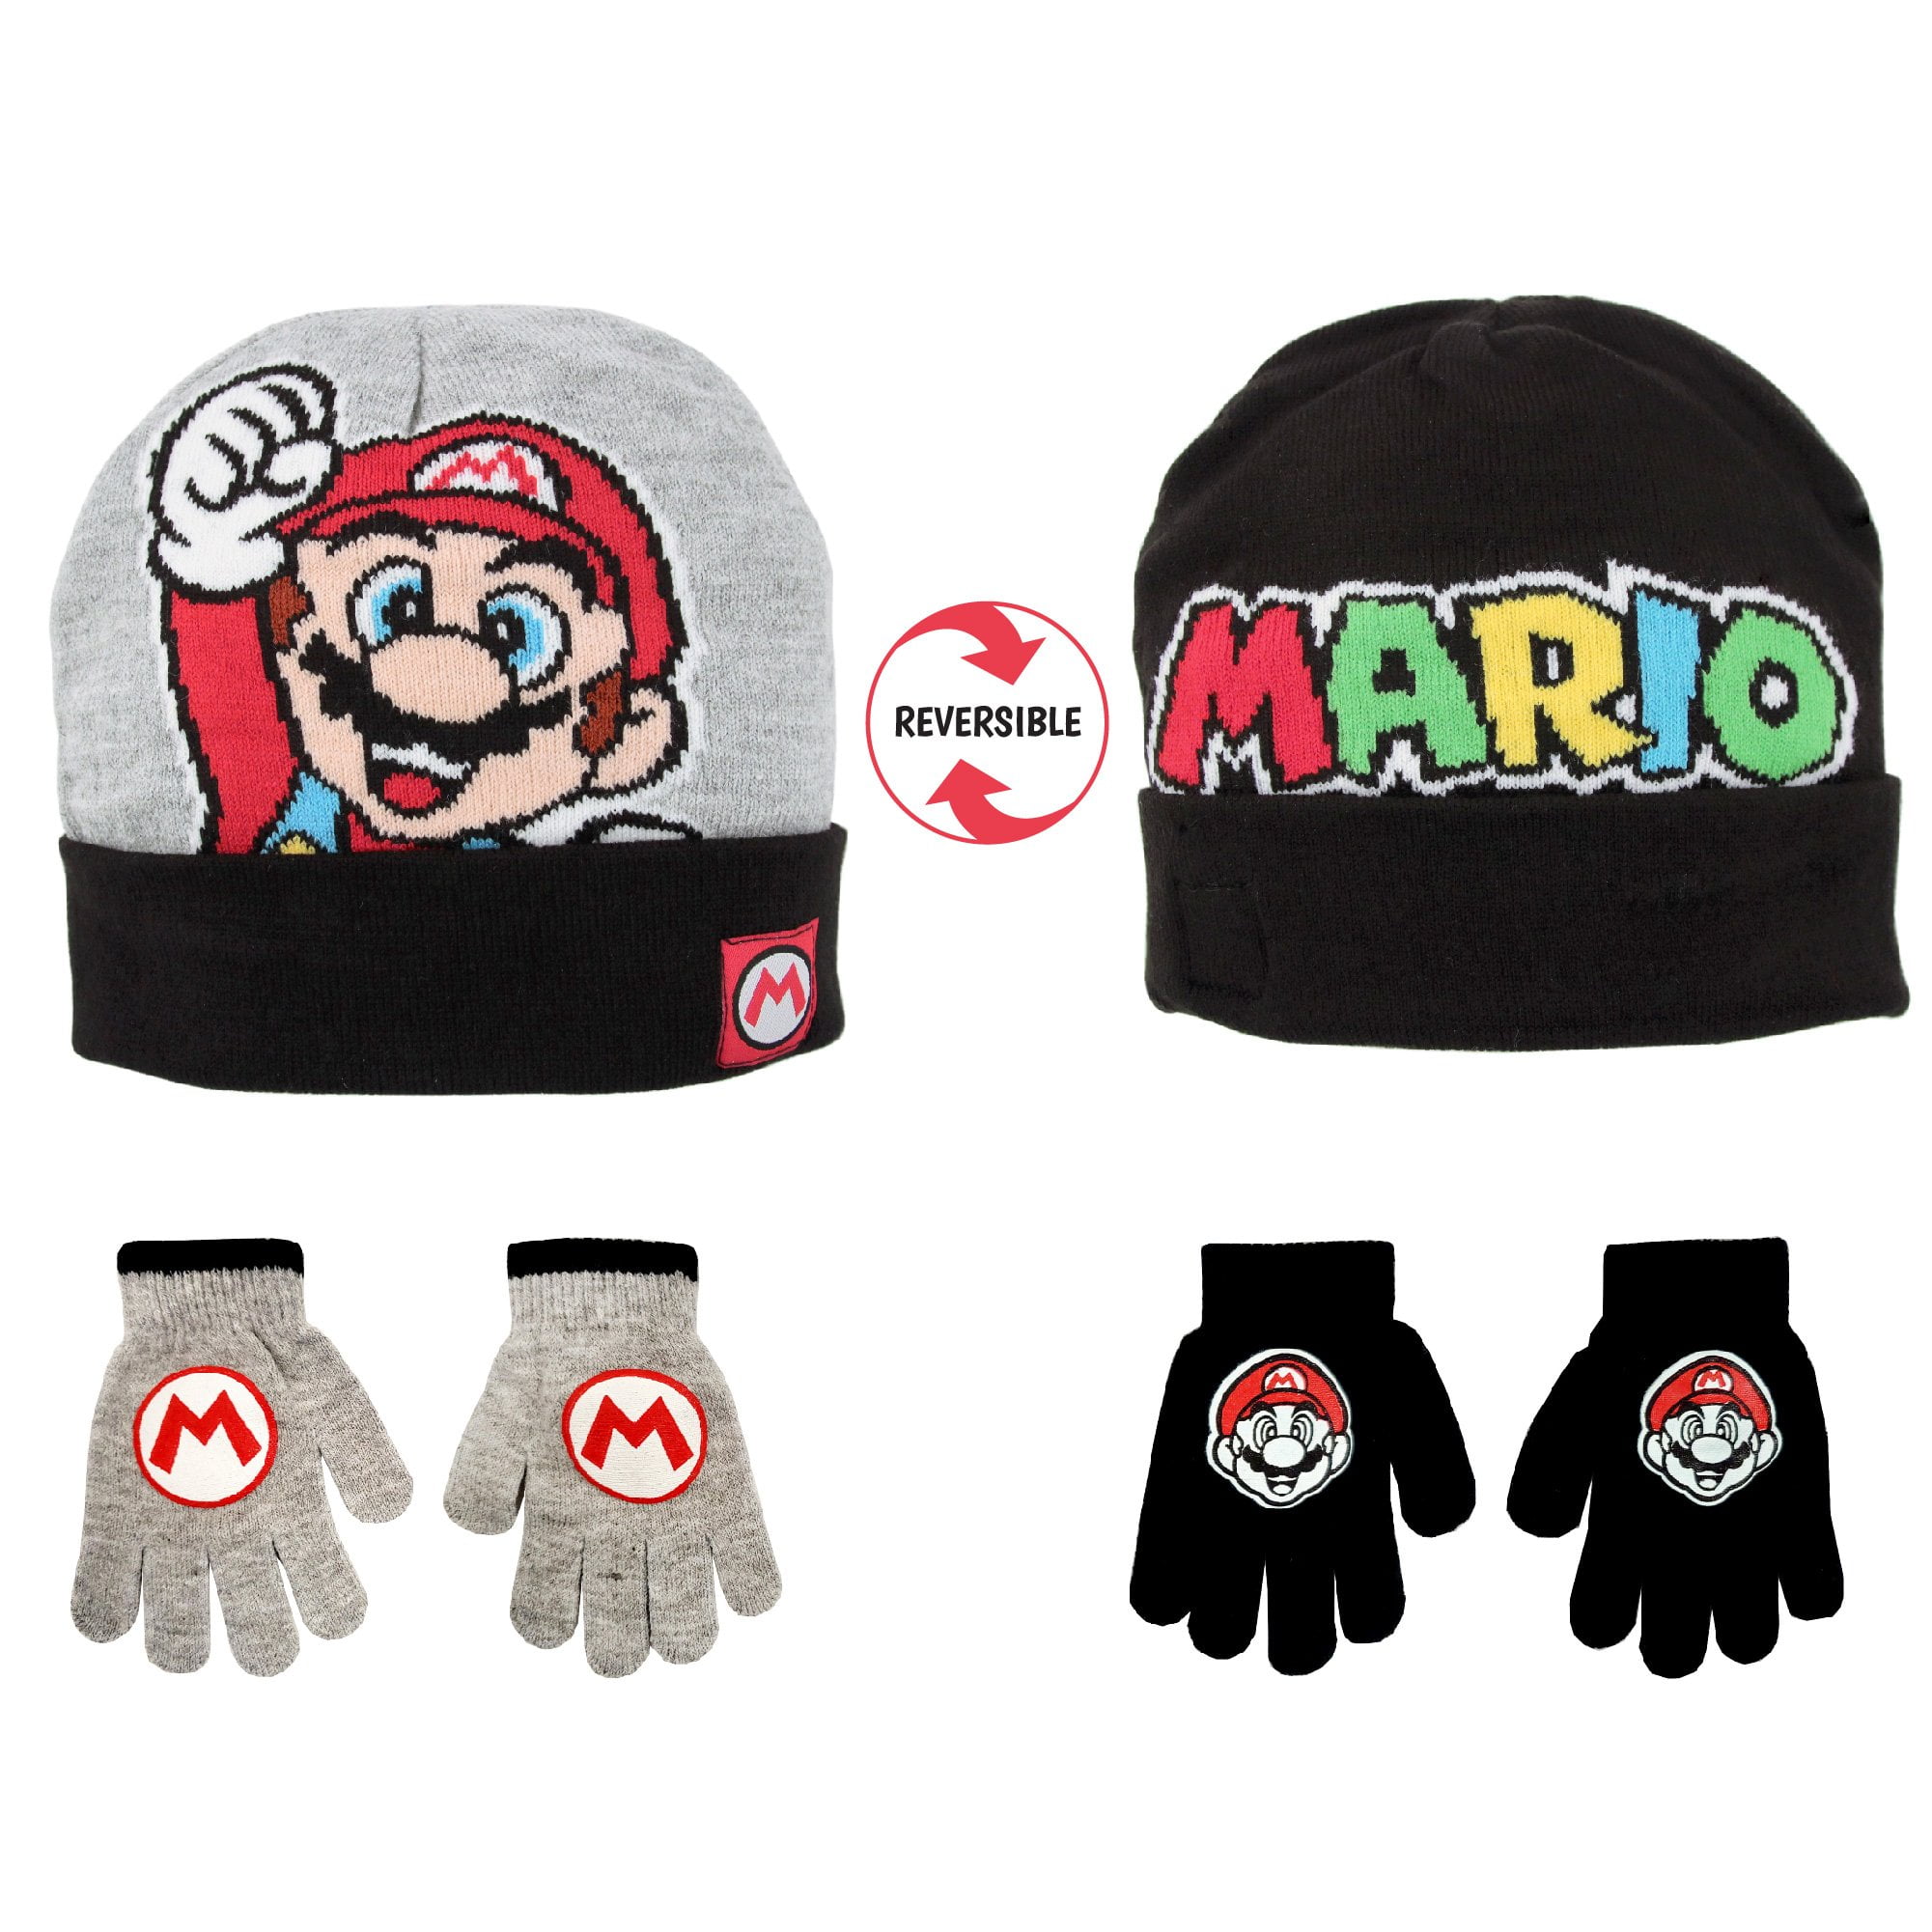 Boys Kids Children Super Mario Hat and Gloves Set age 3-9 years size 52-54